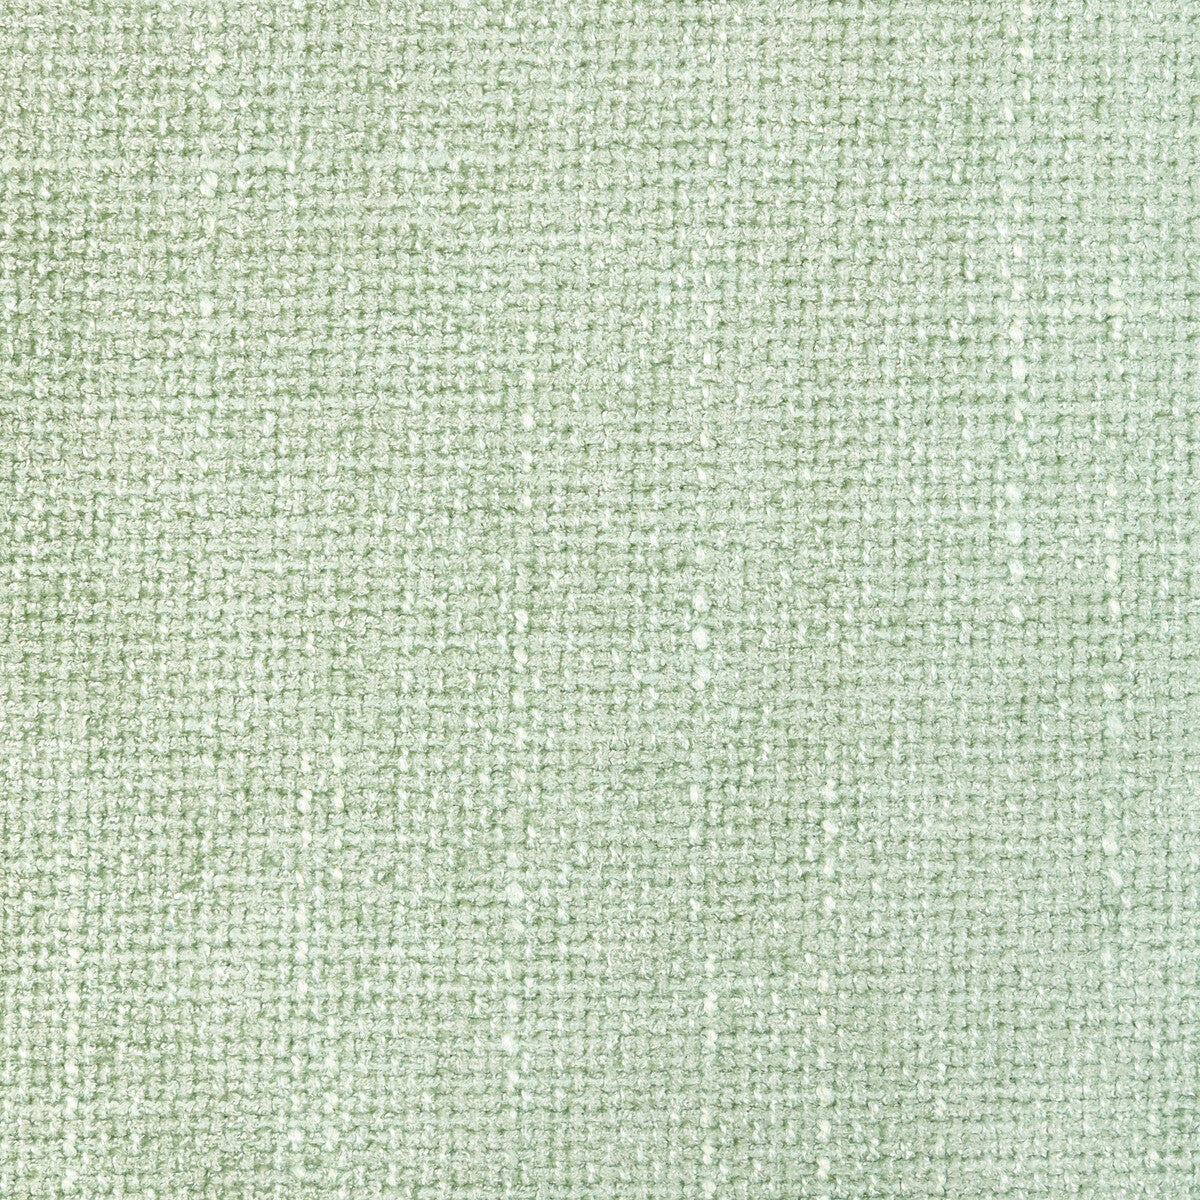 Kravet Smart fabric in 36579-30 color - pattern 36579.30.0 - by Kravet Smart in the Performance Kravetarmor collection